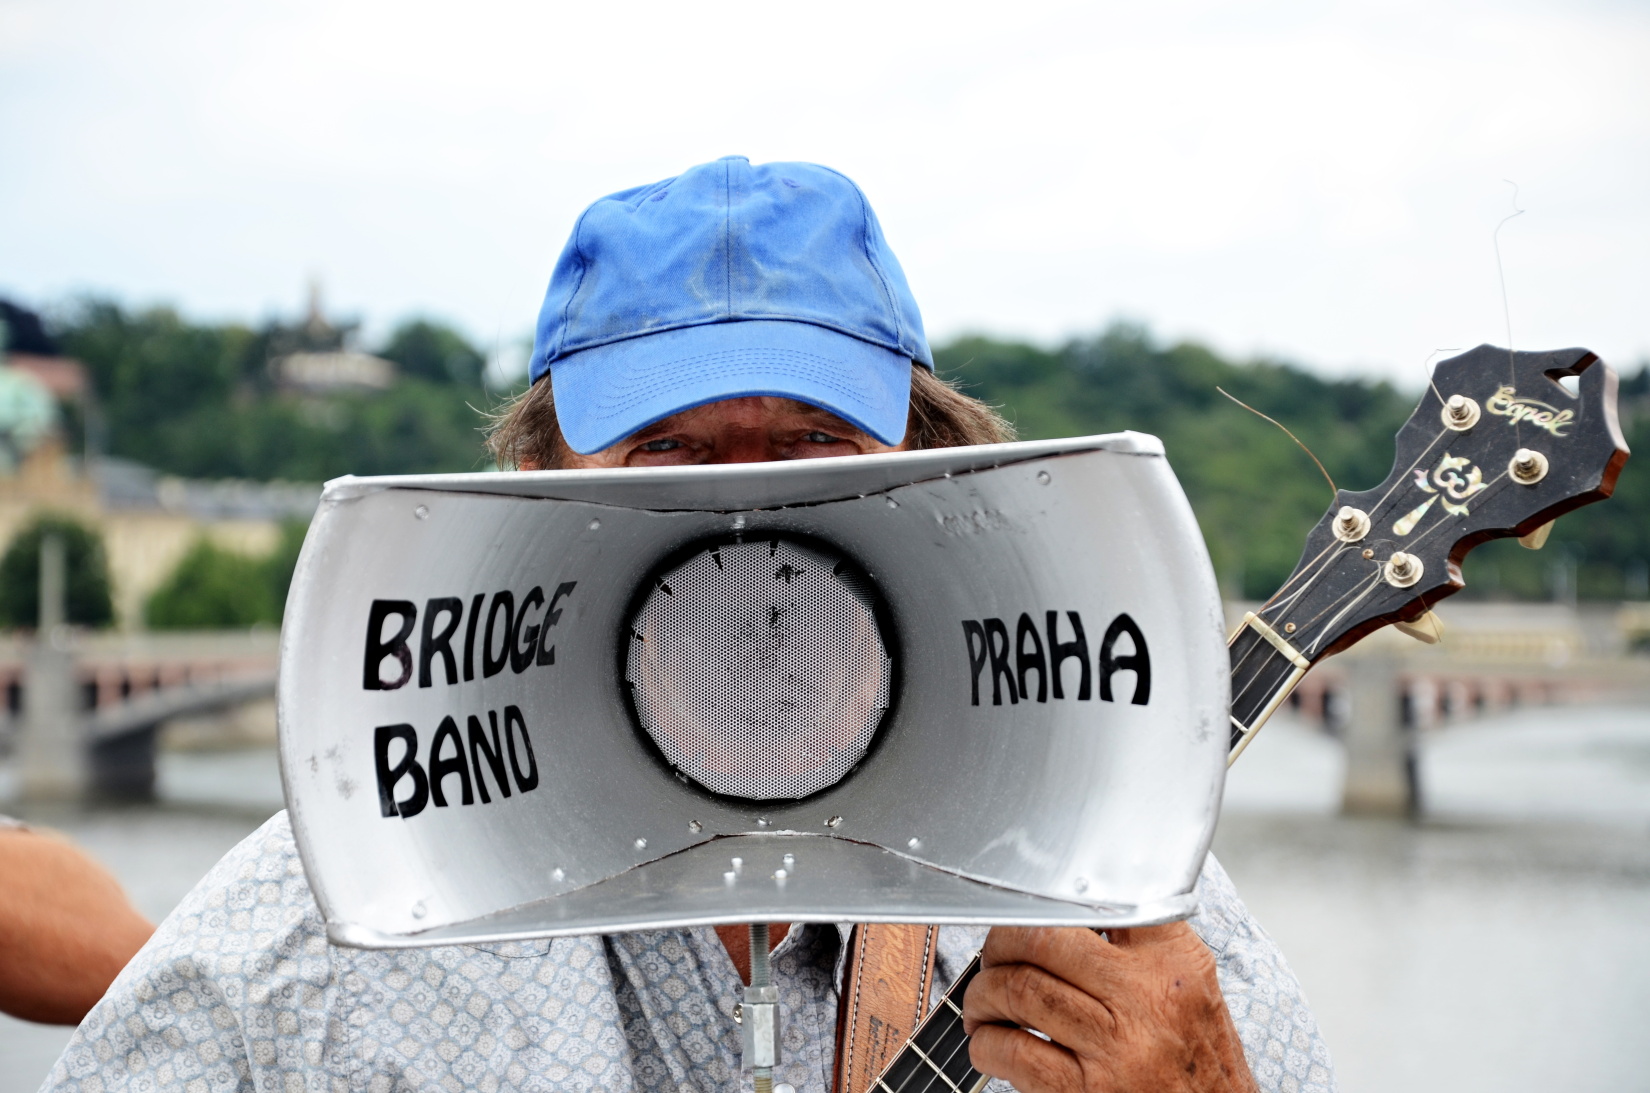 Bridge Band